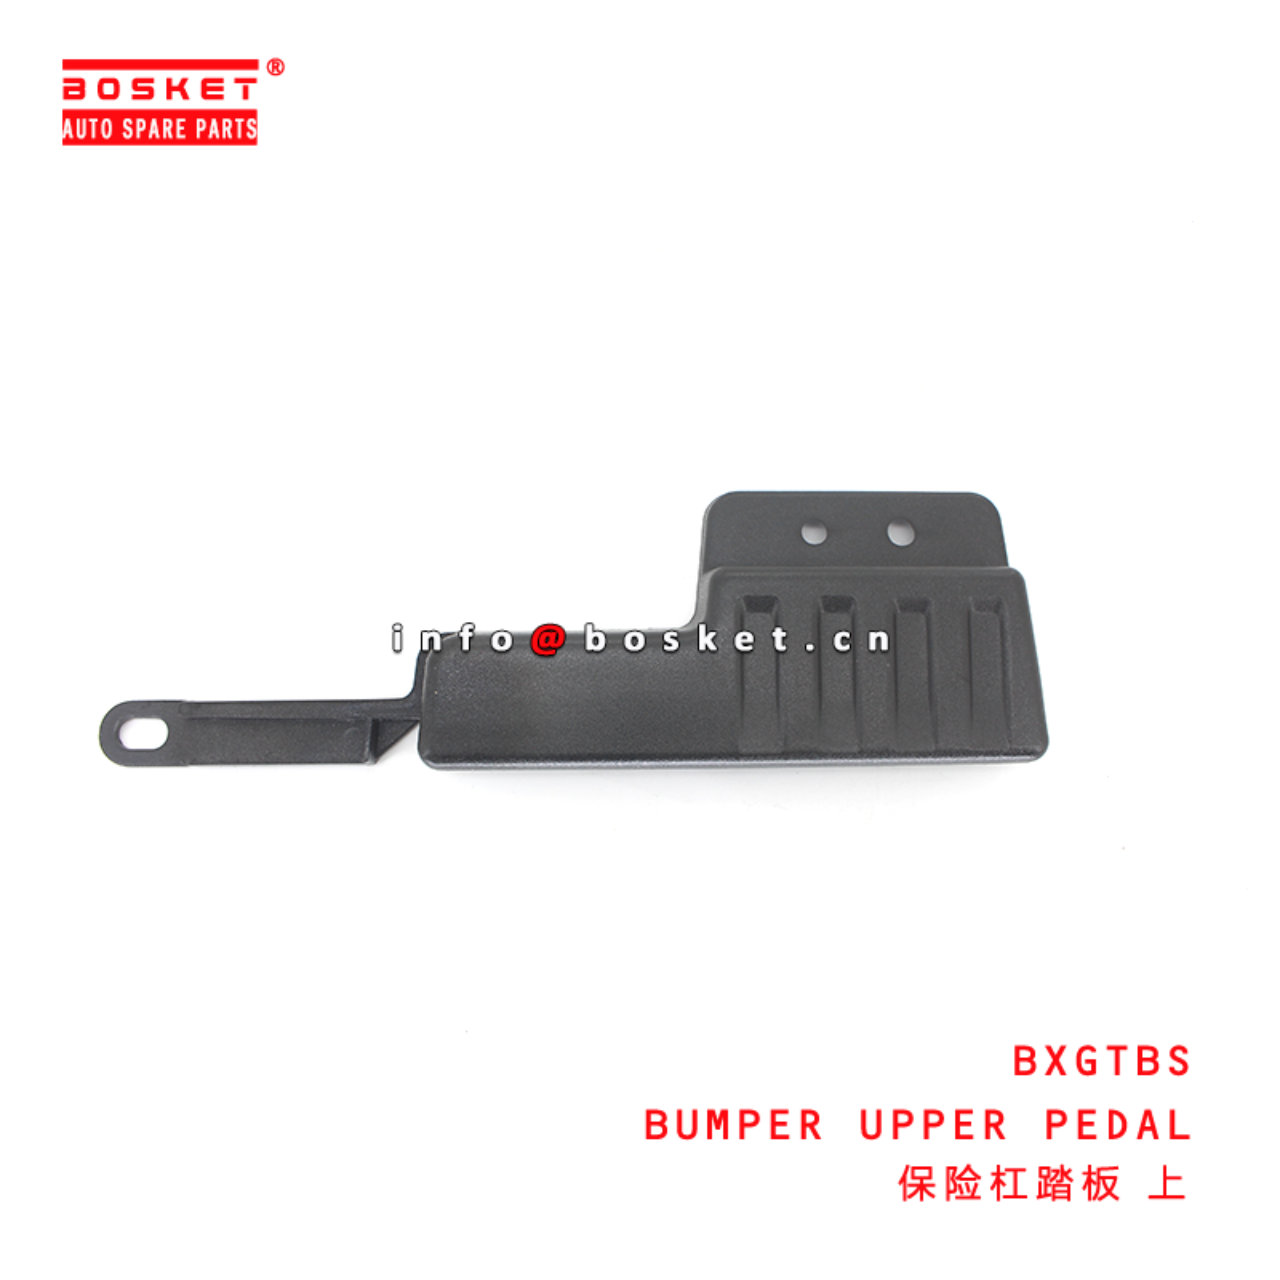 BXGTBS Bumper Upper Pedal Suitable for ISUZU HINO500